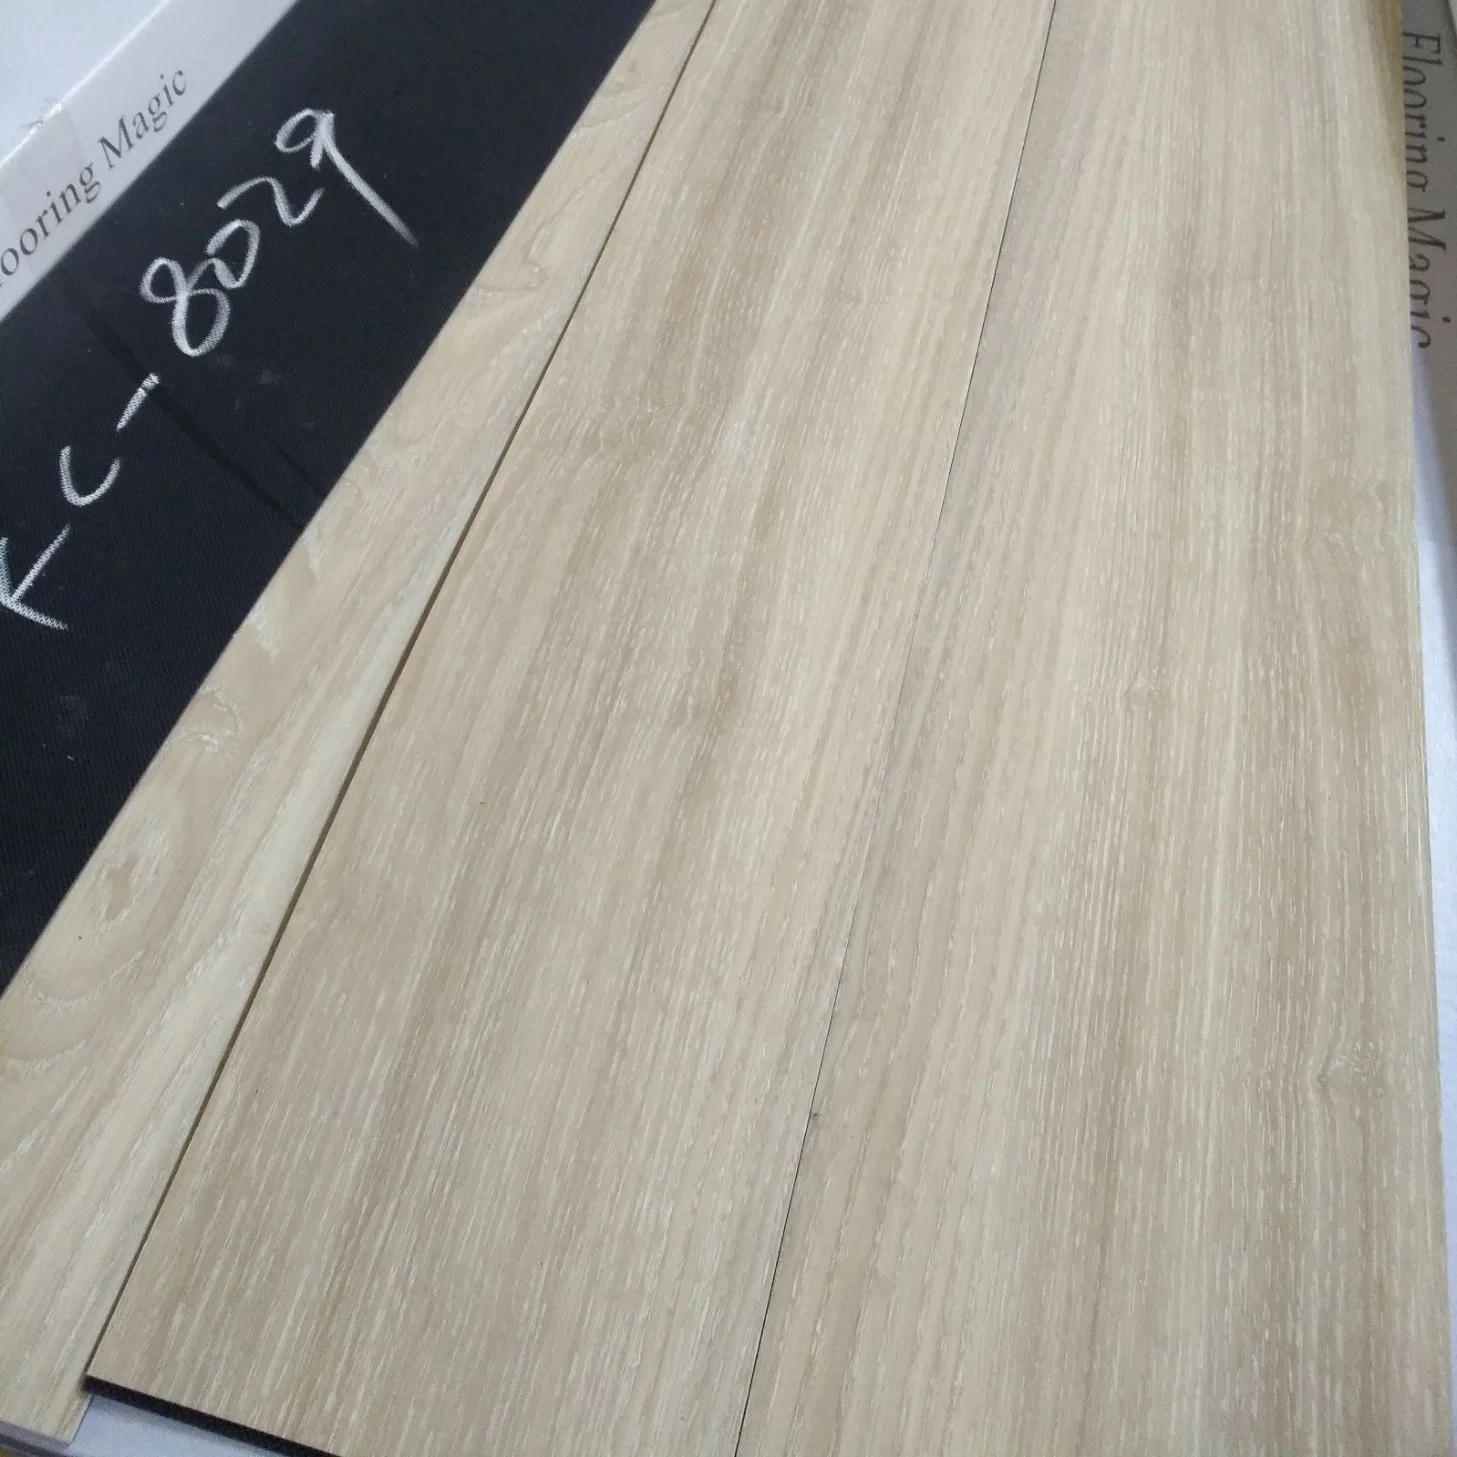 Schalldichte Holz Serie PVC Bodenbelag Plank Kunststoff PVC / SPC / Vinyl Bodenbelag